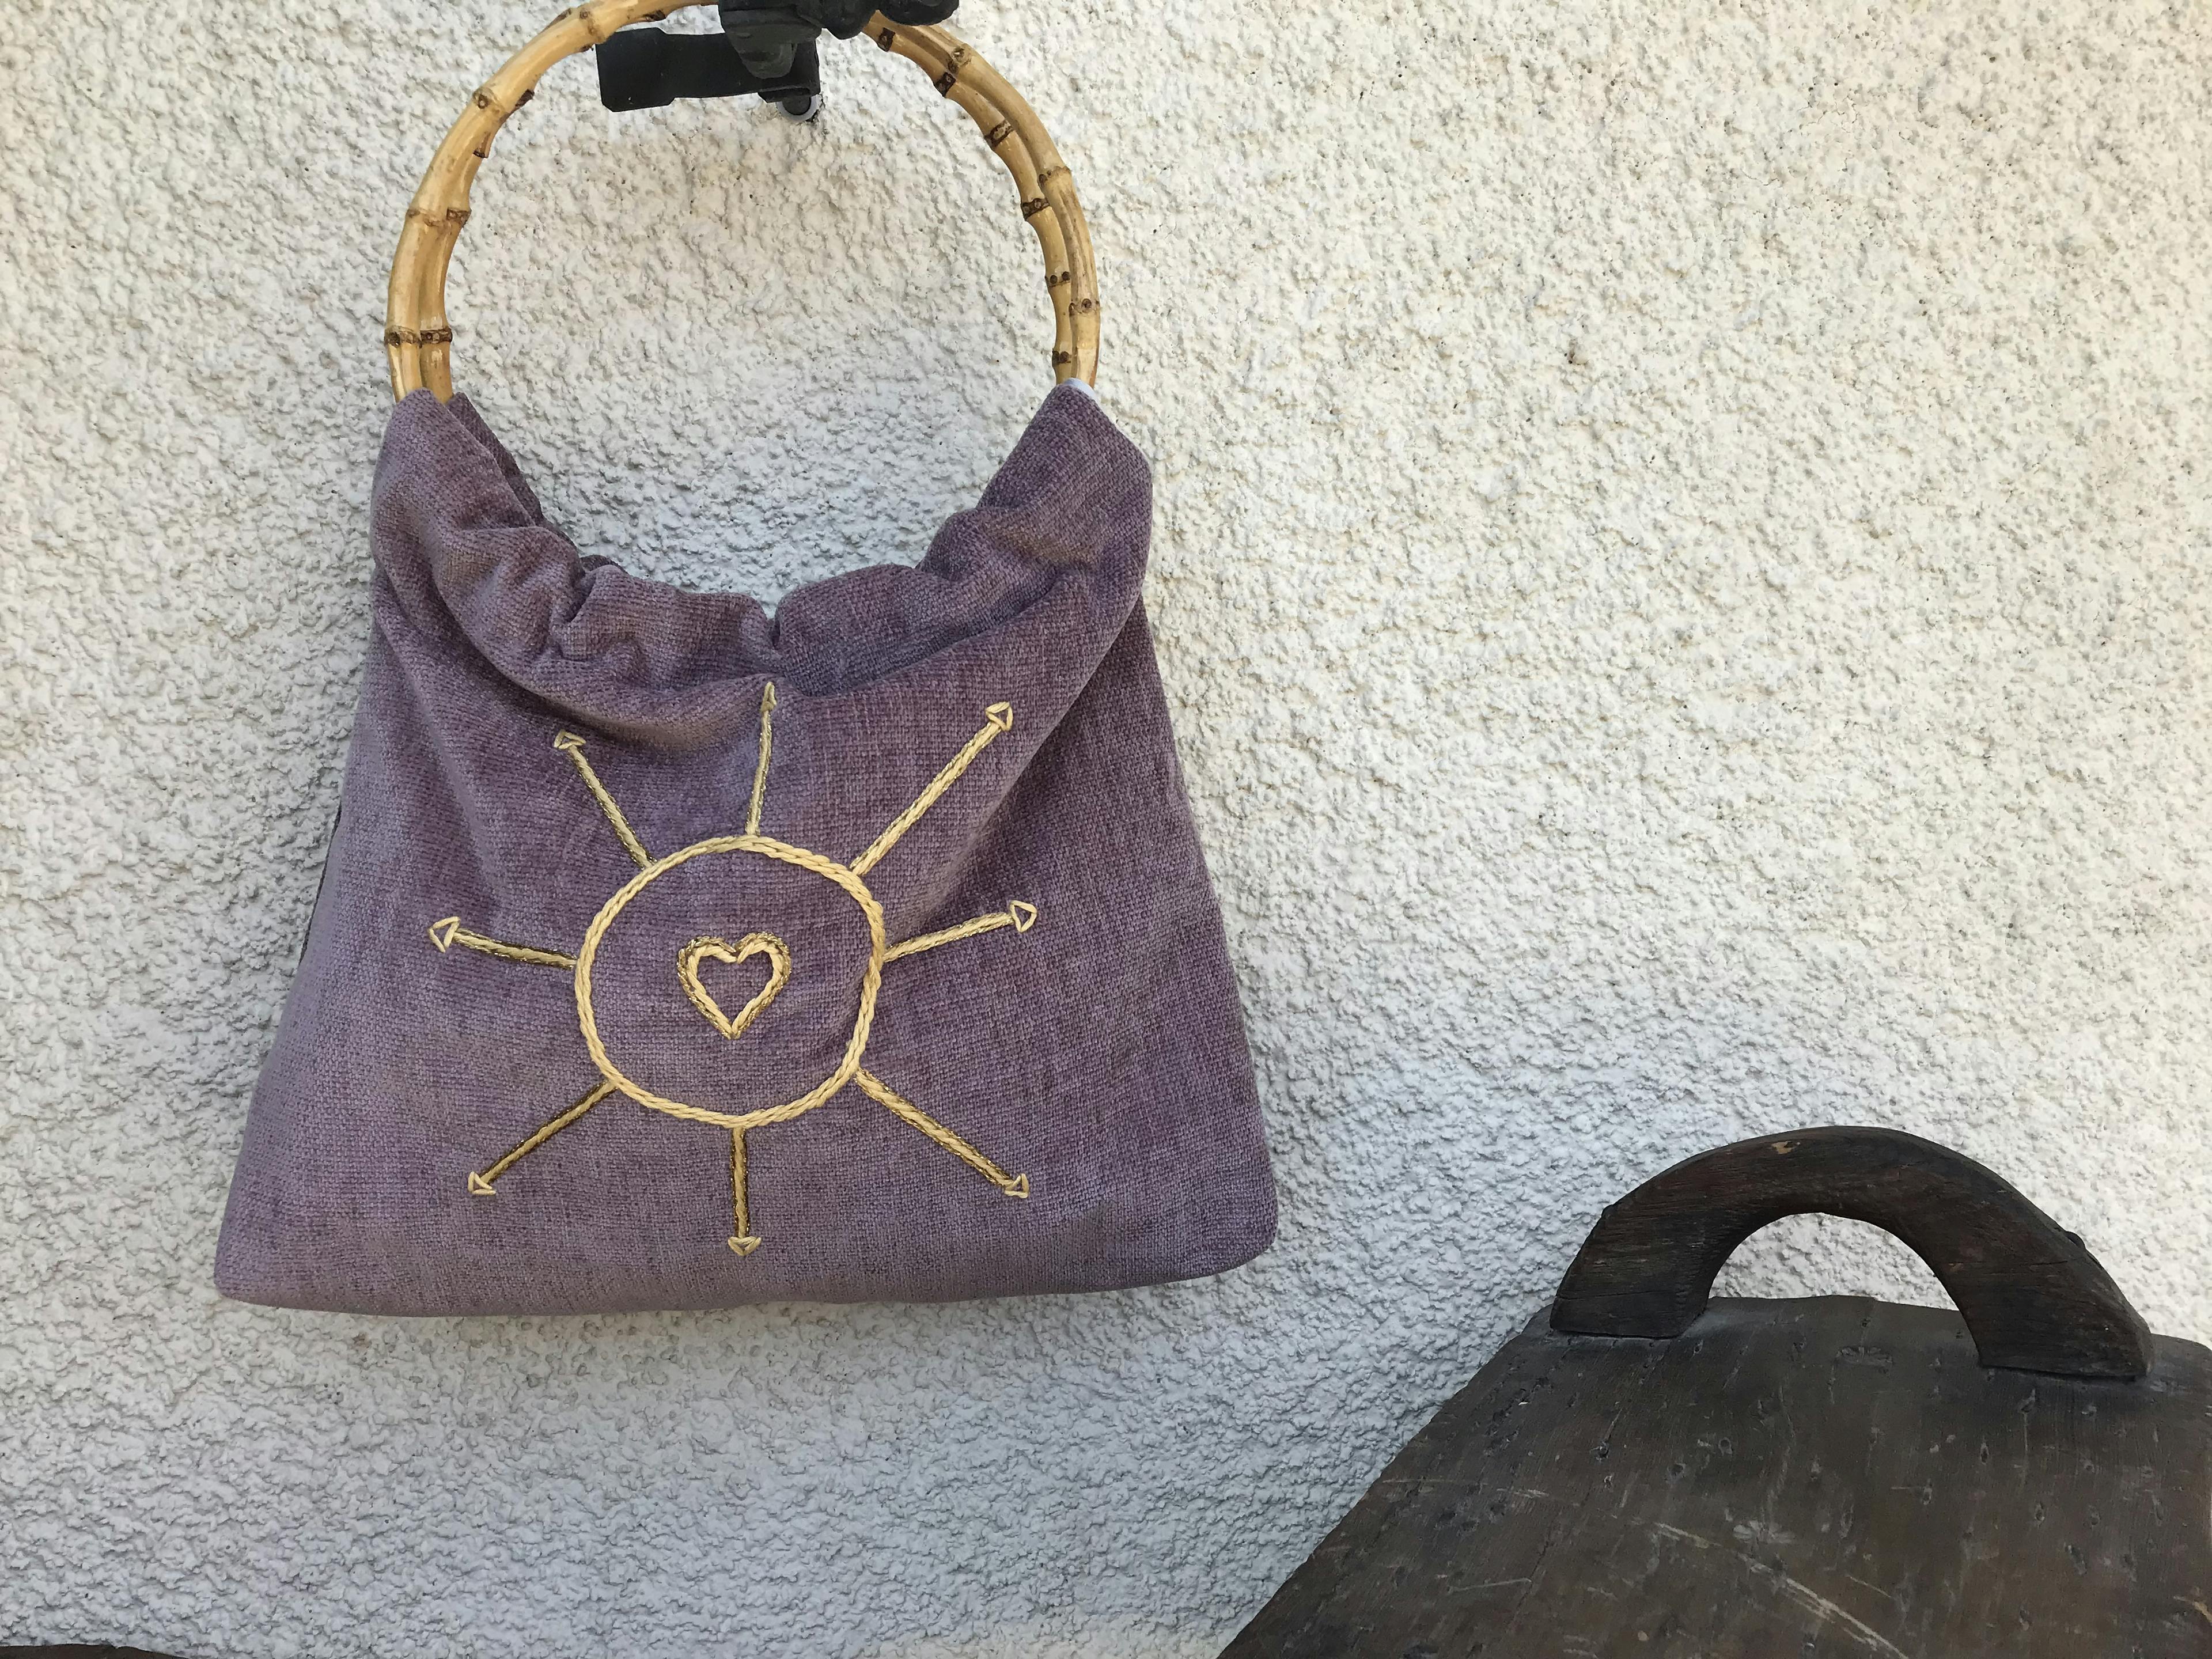 Handmade handbag , artisanal product for direct sale in Switzerland